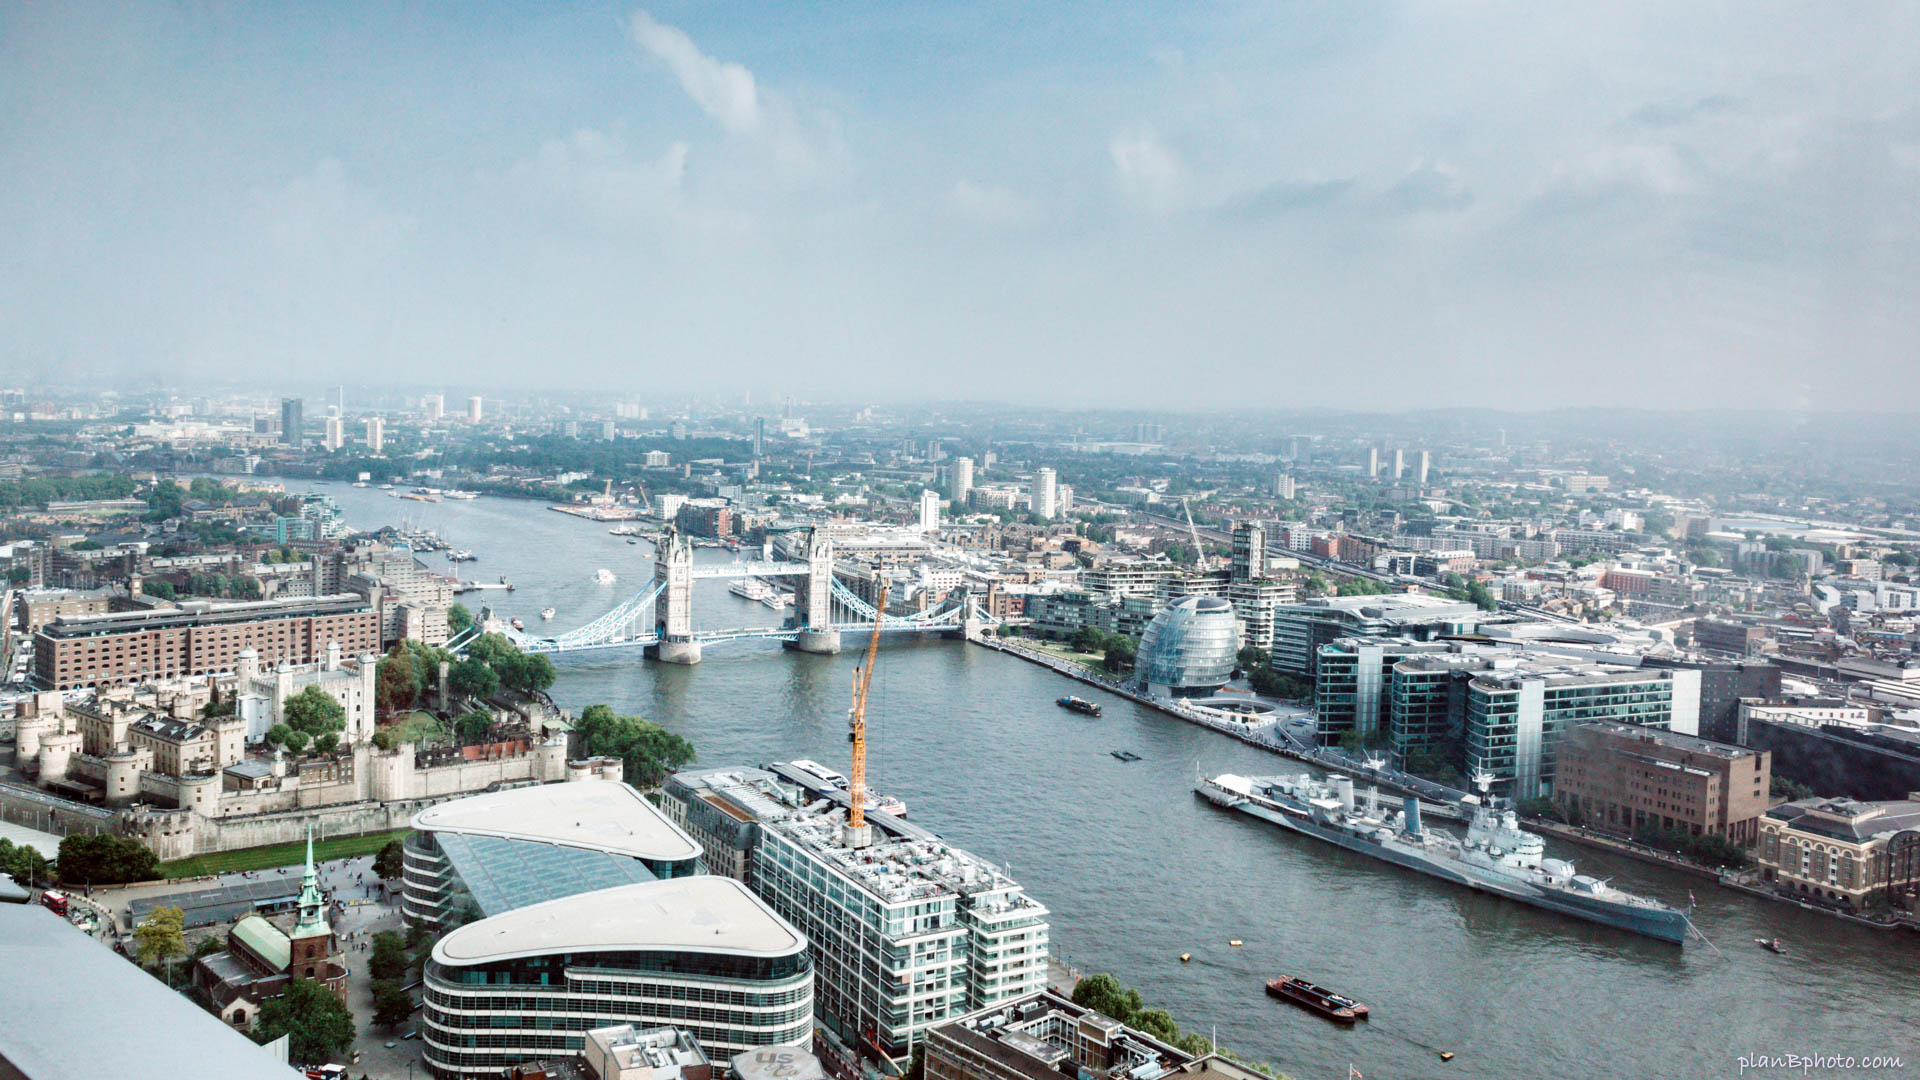 London Bridge from above